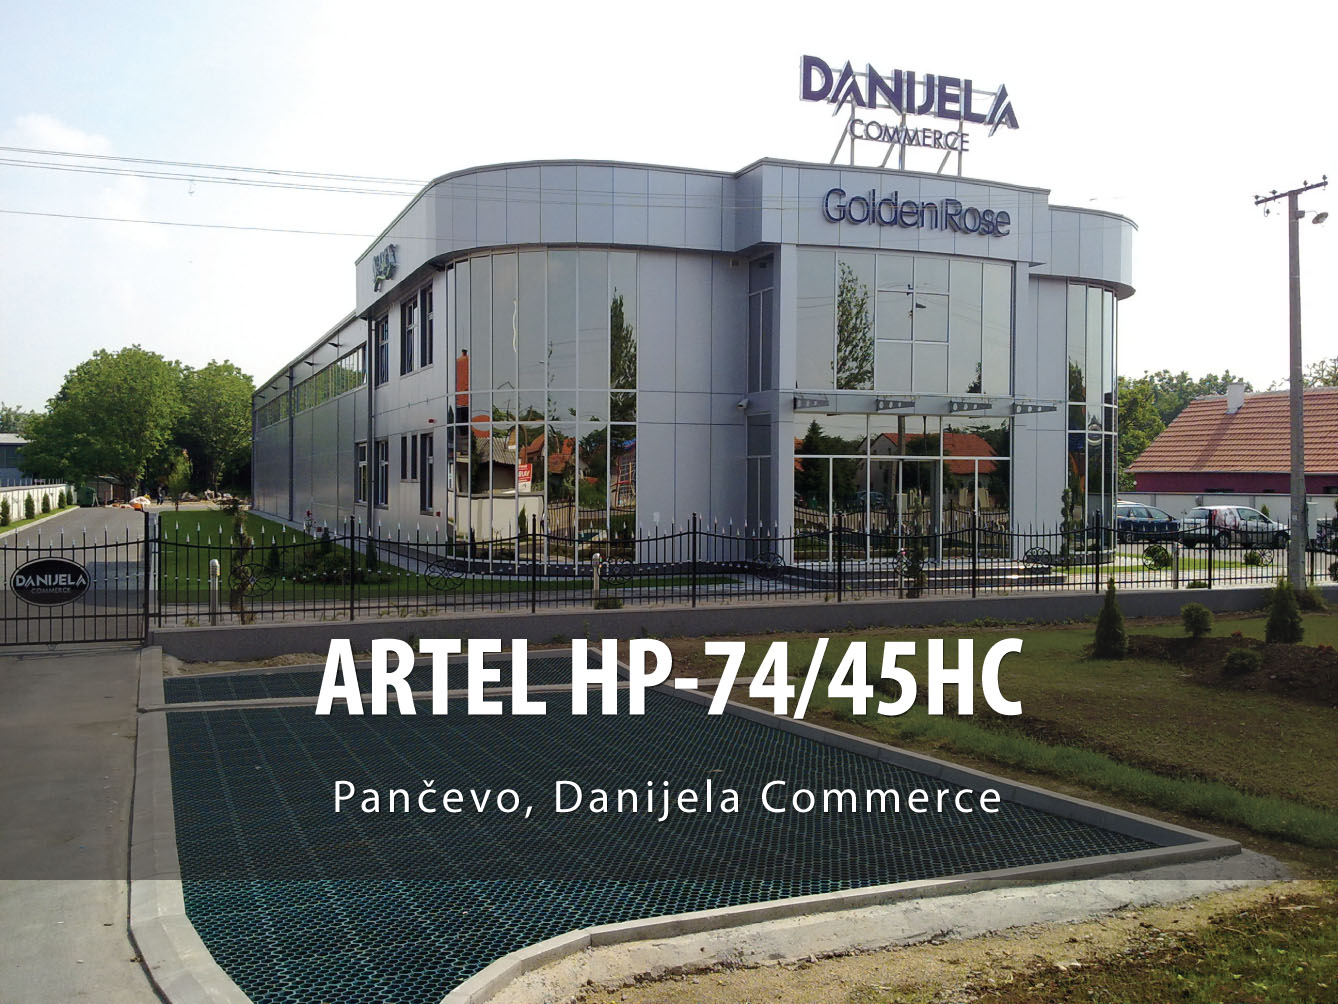 Danijela Commerce ARTEL HP 74 45HC